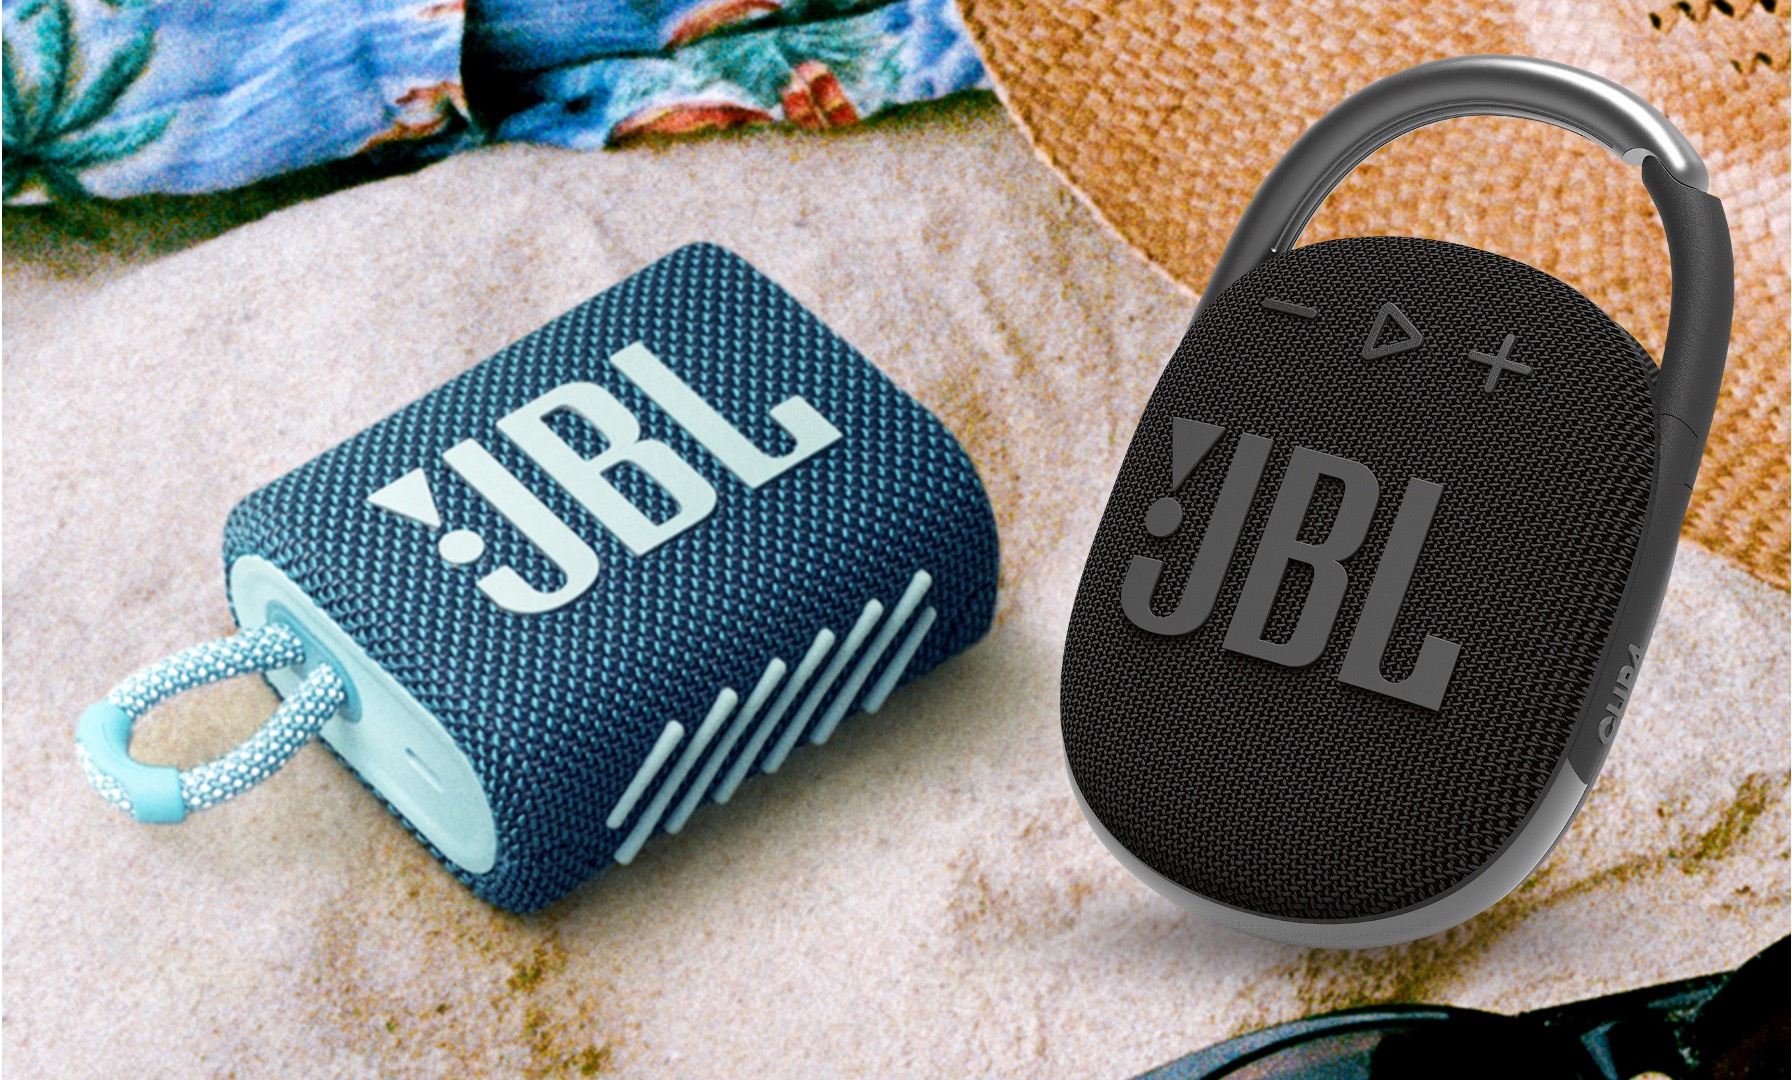 JBL Clip 4 and JBL Go 3 Portable Bluetooth Speakers